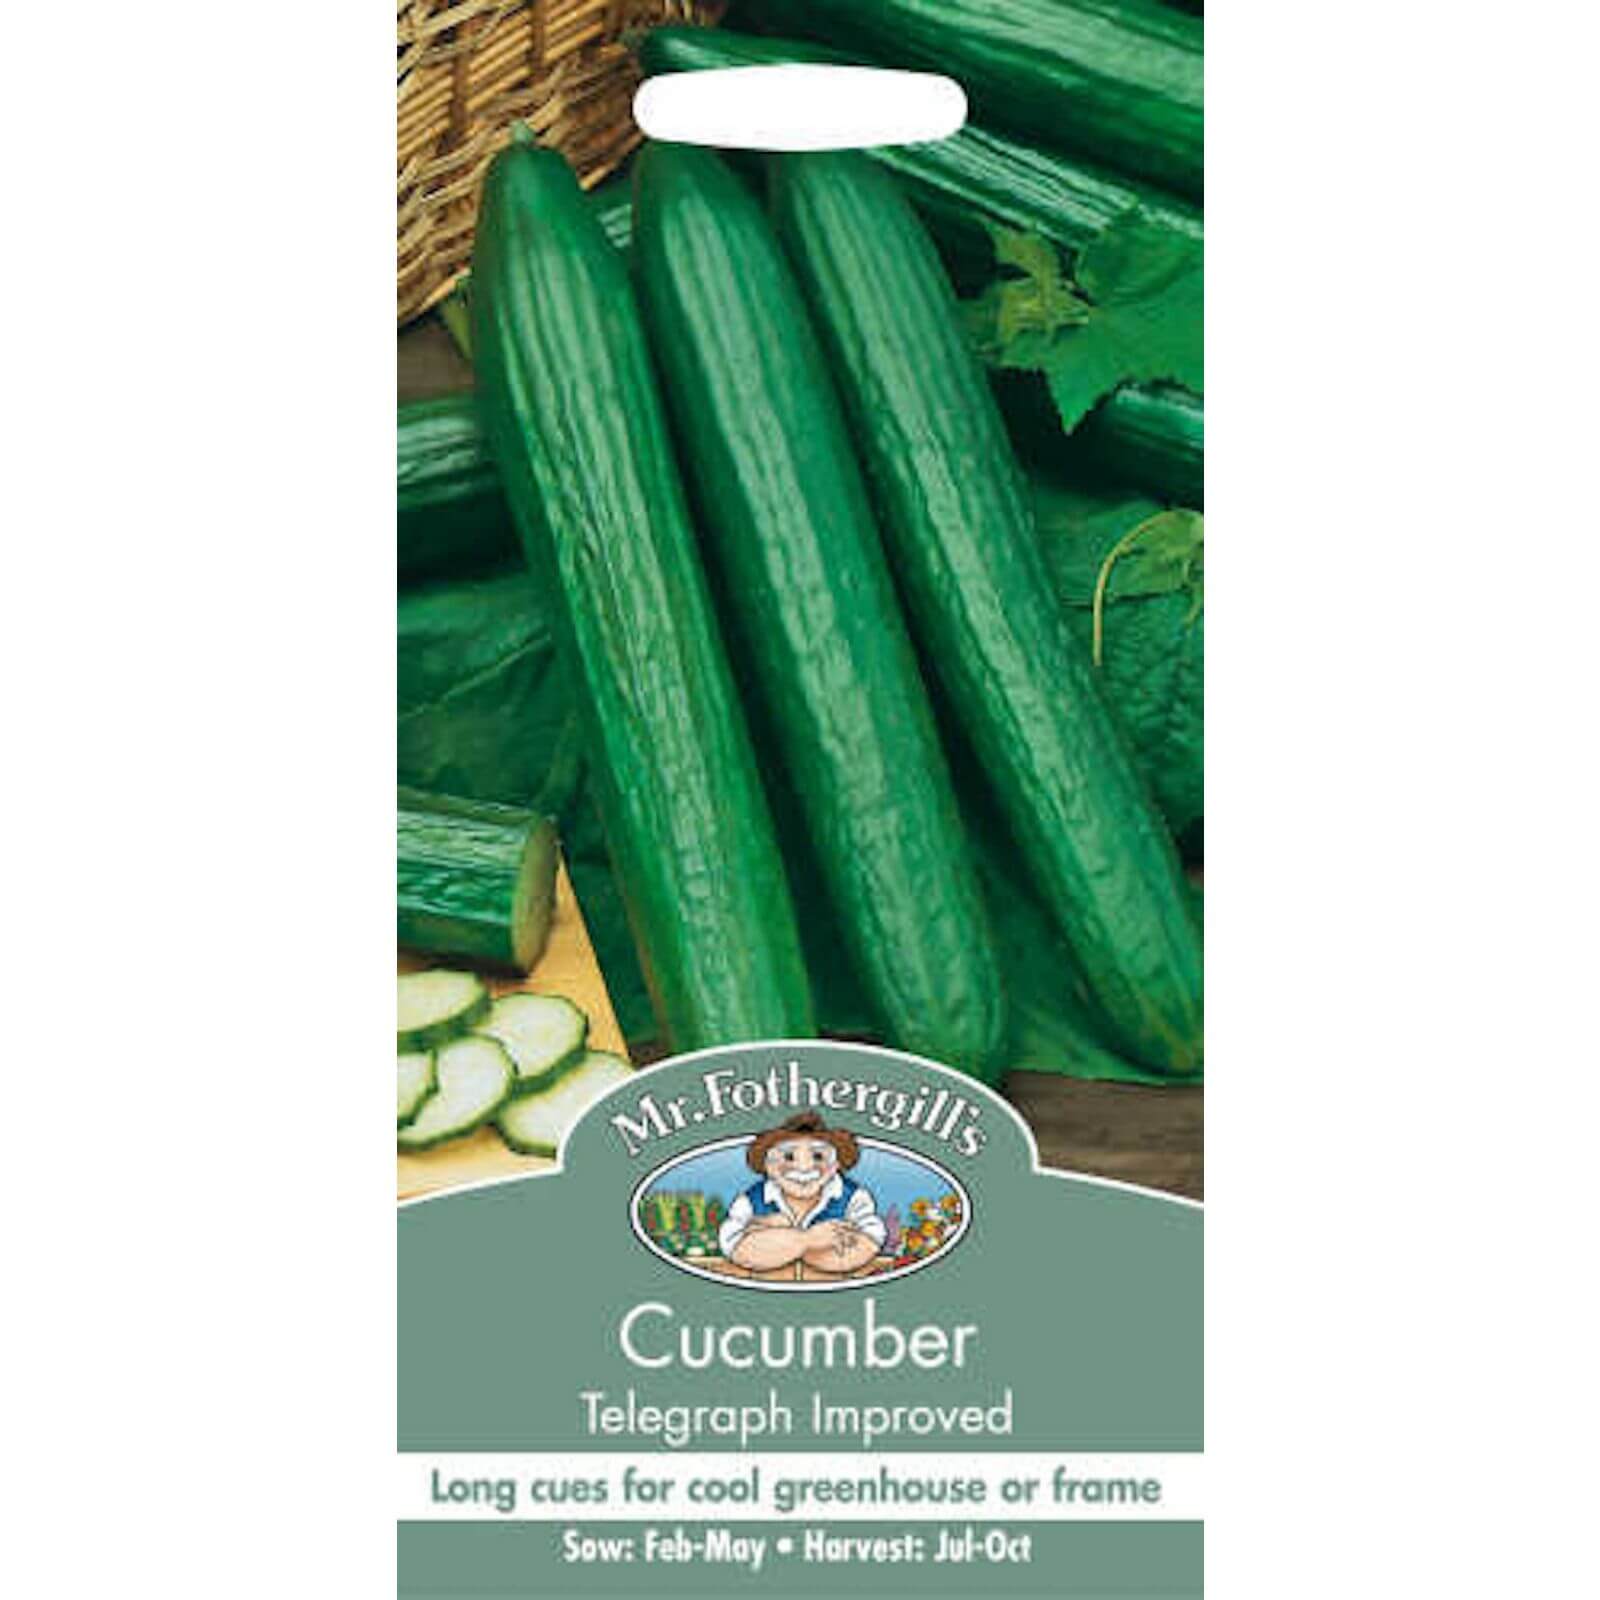 Mr. Fothergill's Cucumber Telegraph Improved Seeds